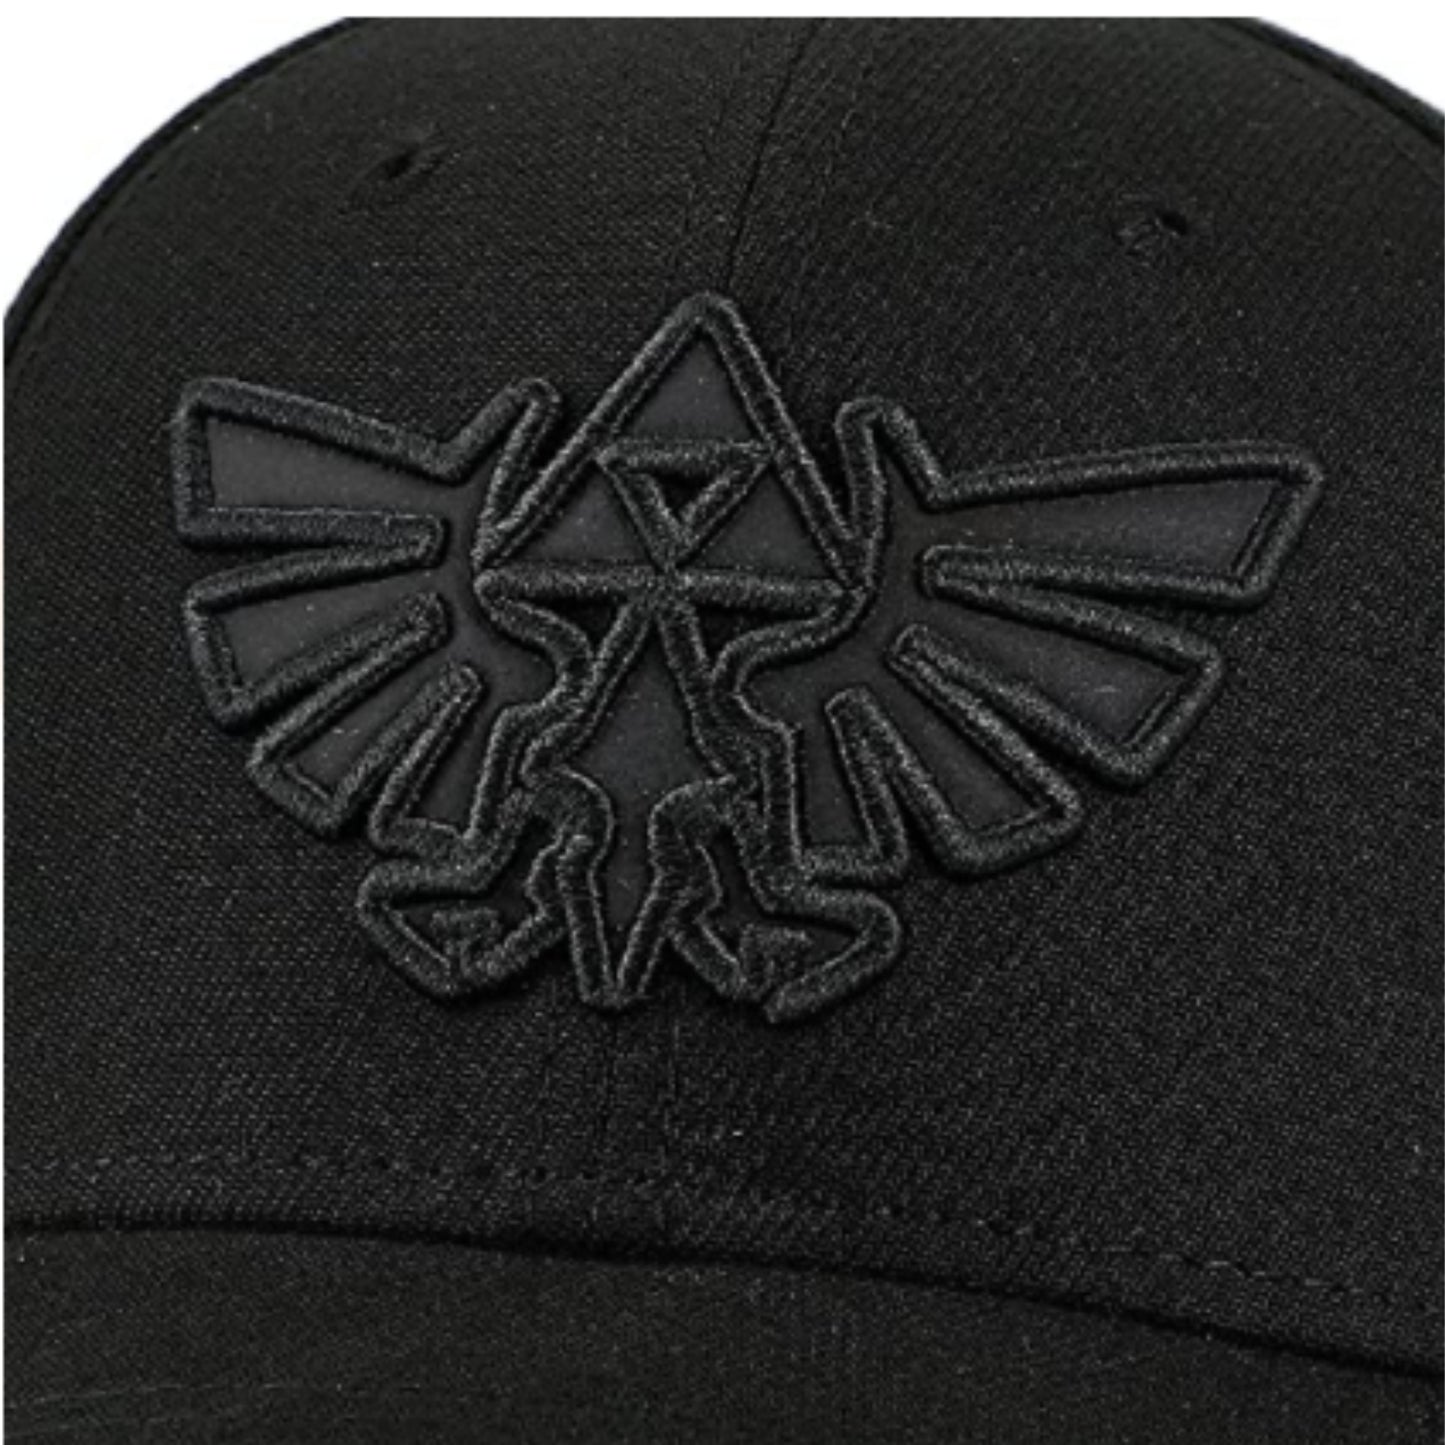 Hylian Crest Legend of Zelda Elite Flex Black Hat